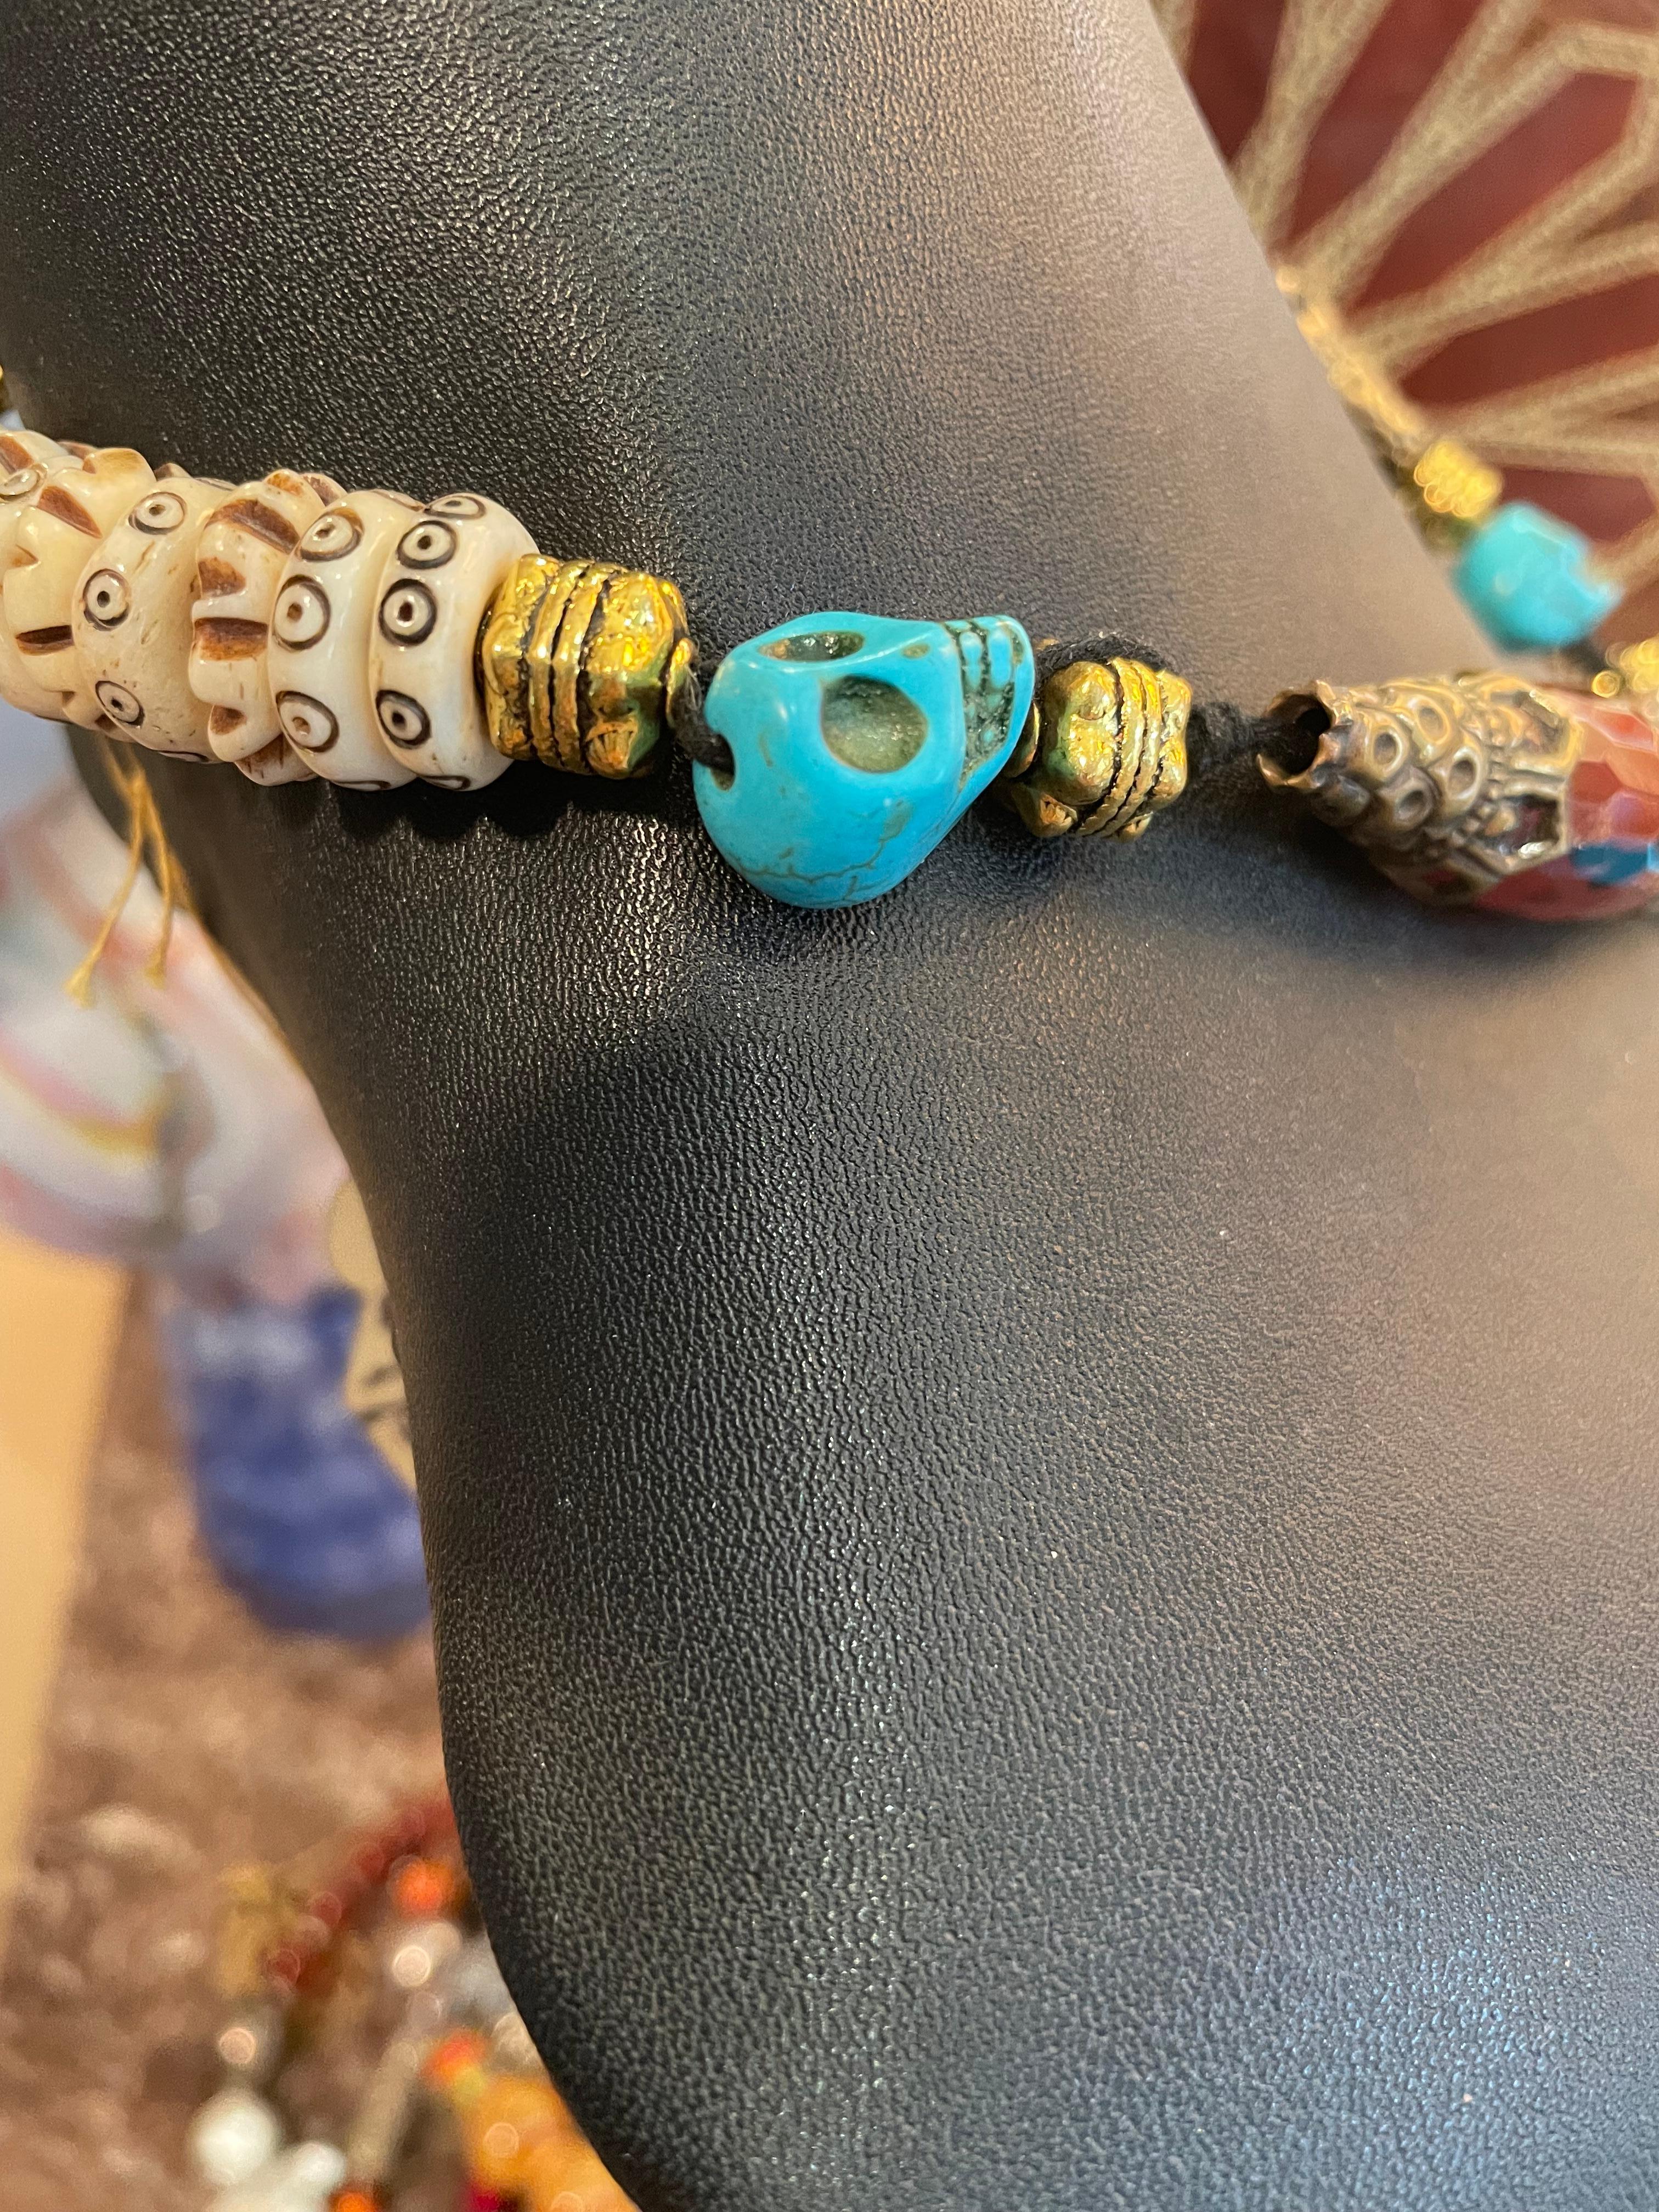 Artisan LB Tibetan pendant Turquoise vintage Indian agate bone discs necklace on offer For Sale